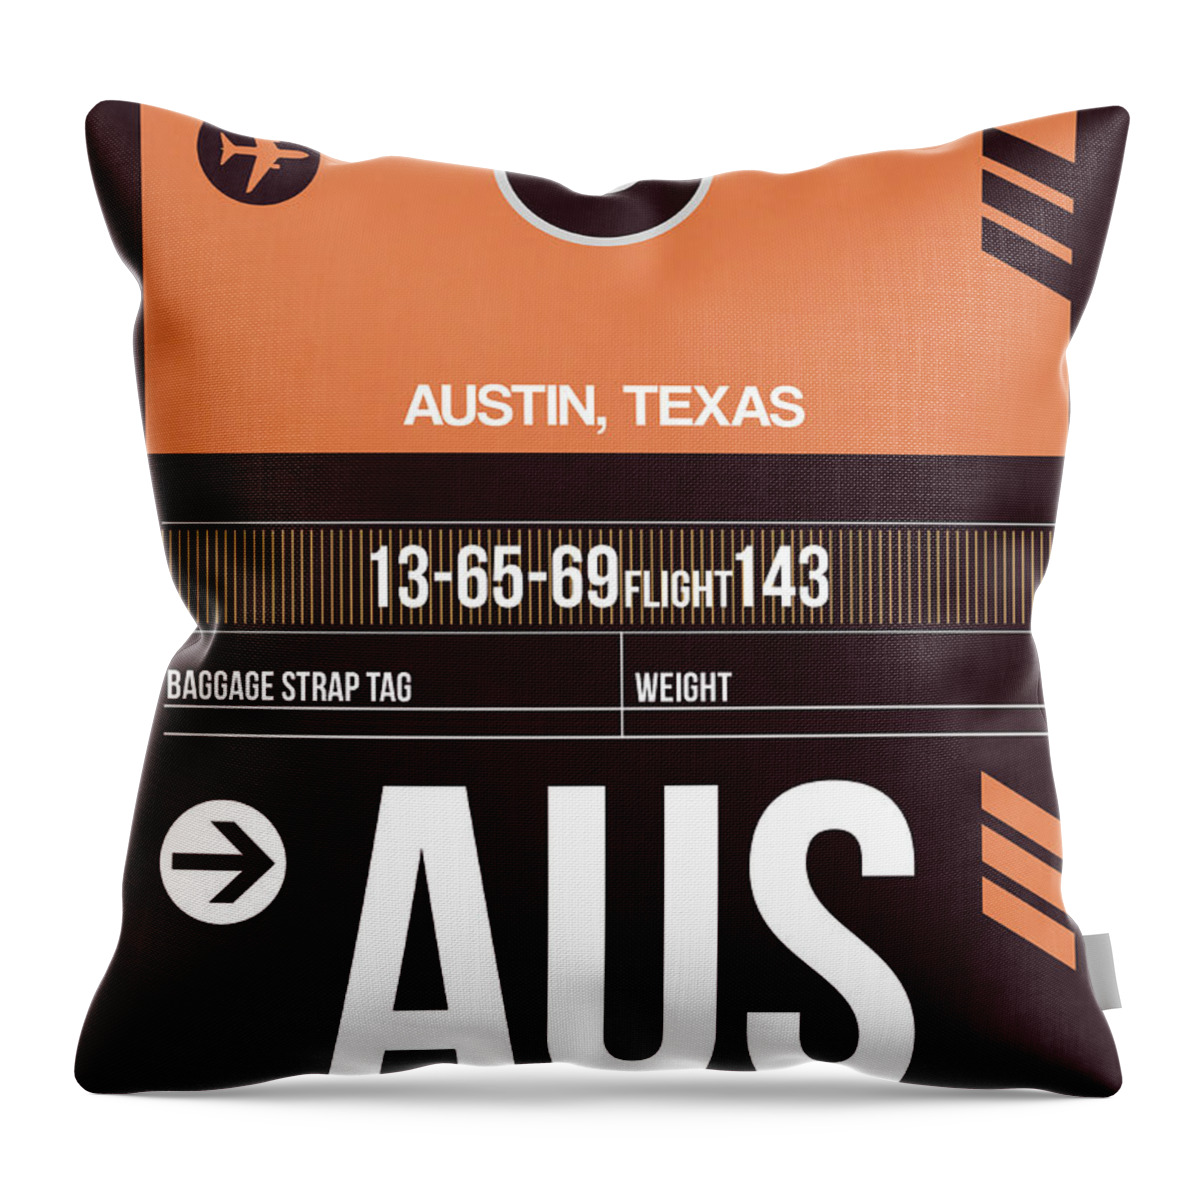  Throw Pillow featuring the digital art Austin Airport Poster 2 by Naxart Studio